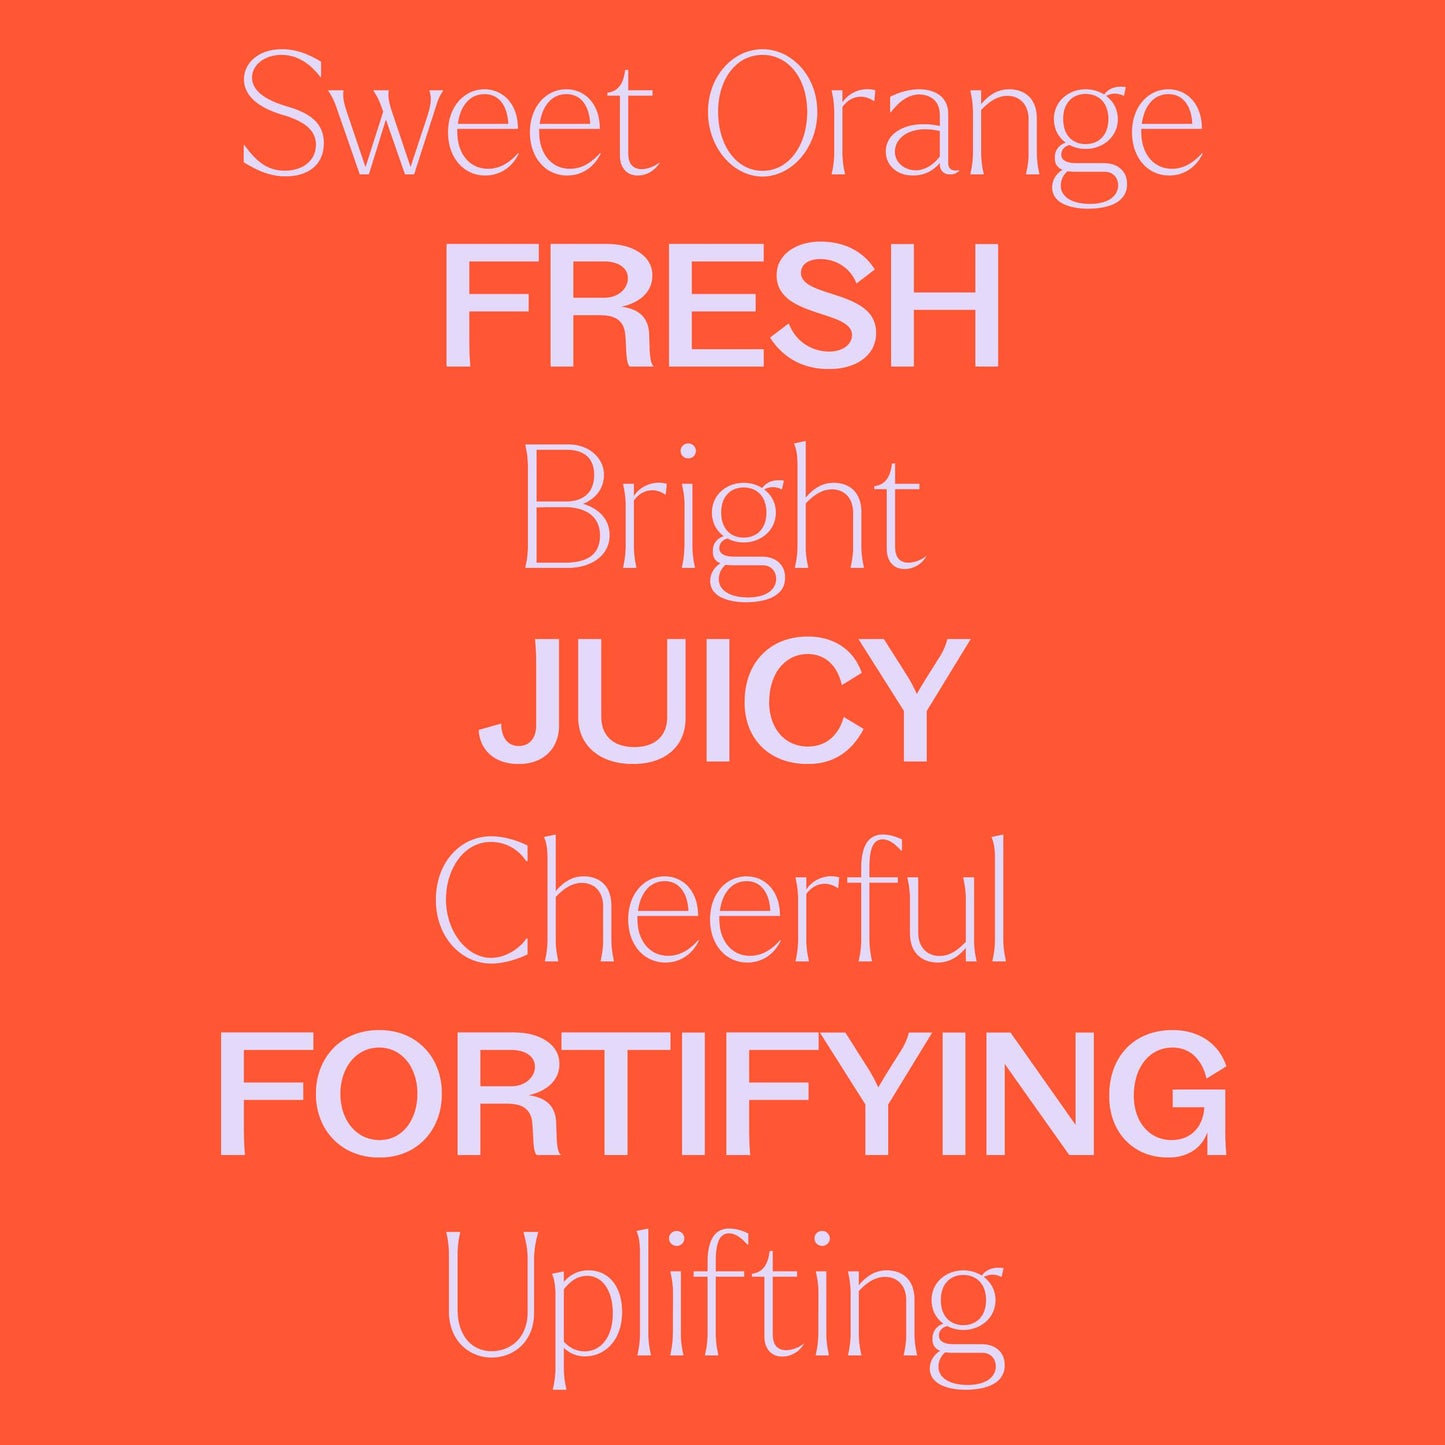 Sweet Orange Body Oil is fresh, juicy, cheerful, fortifying, uplifting